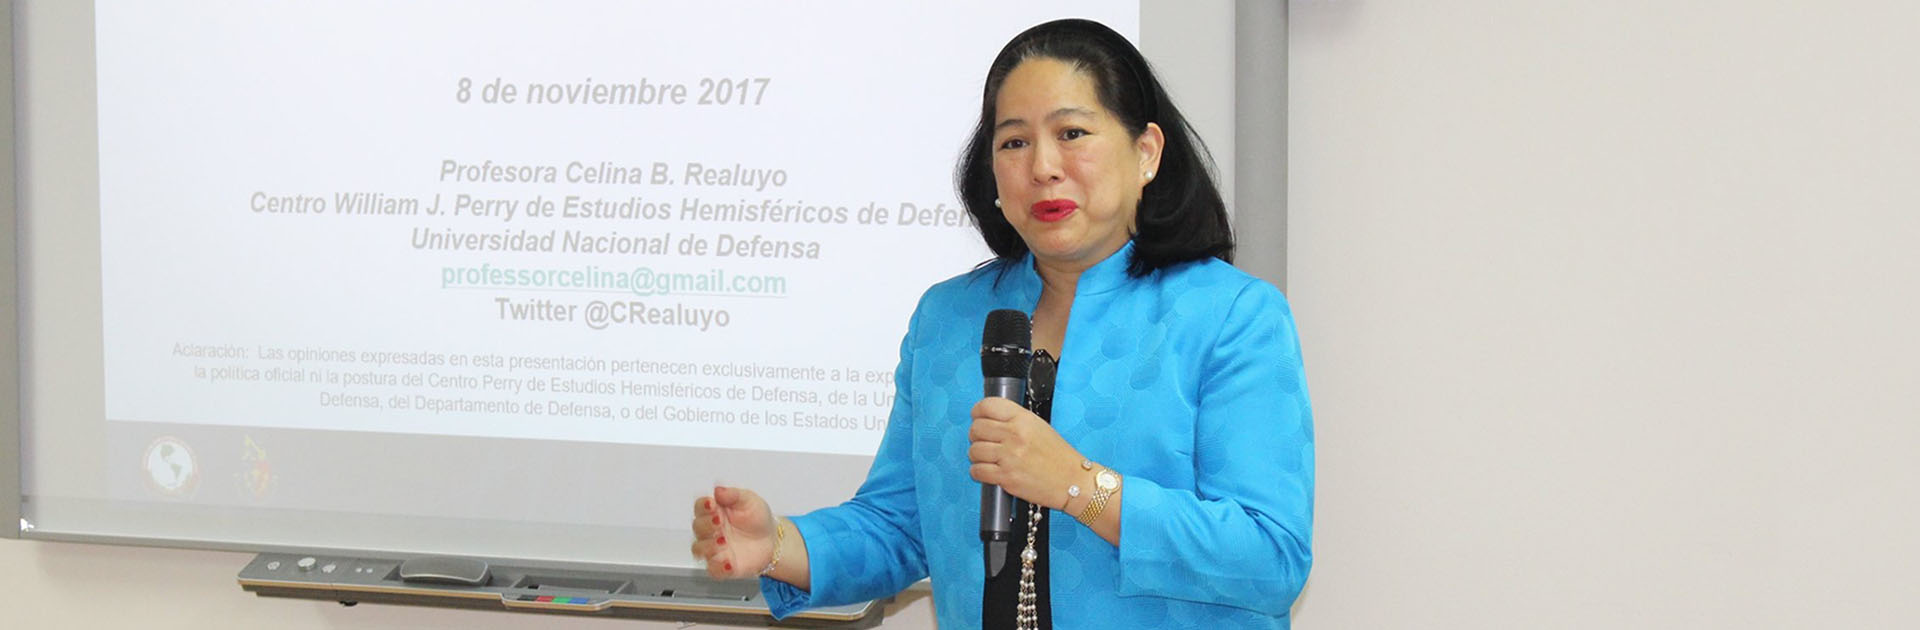 Prof. Celina Realuyo